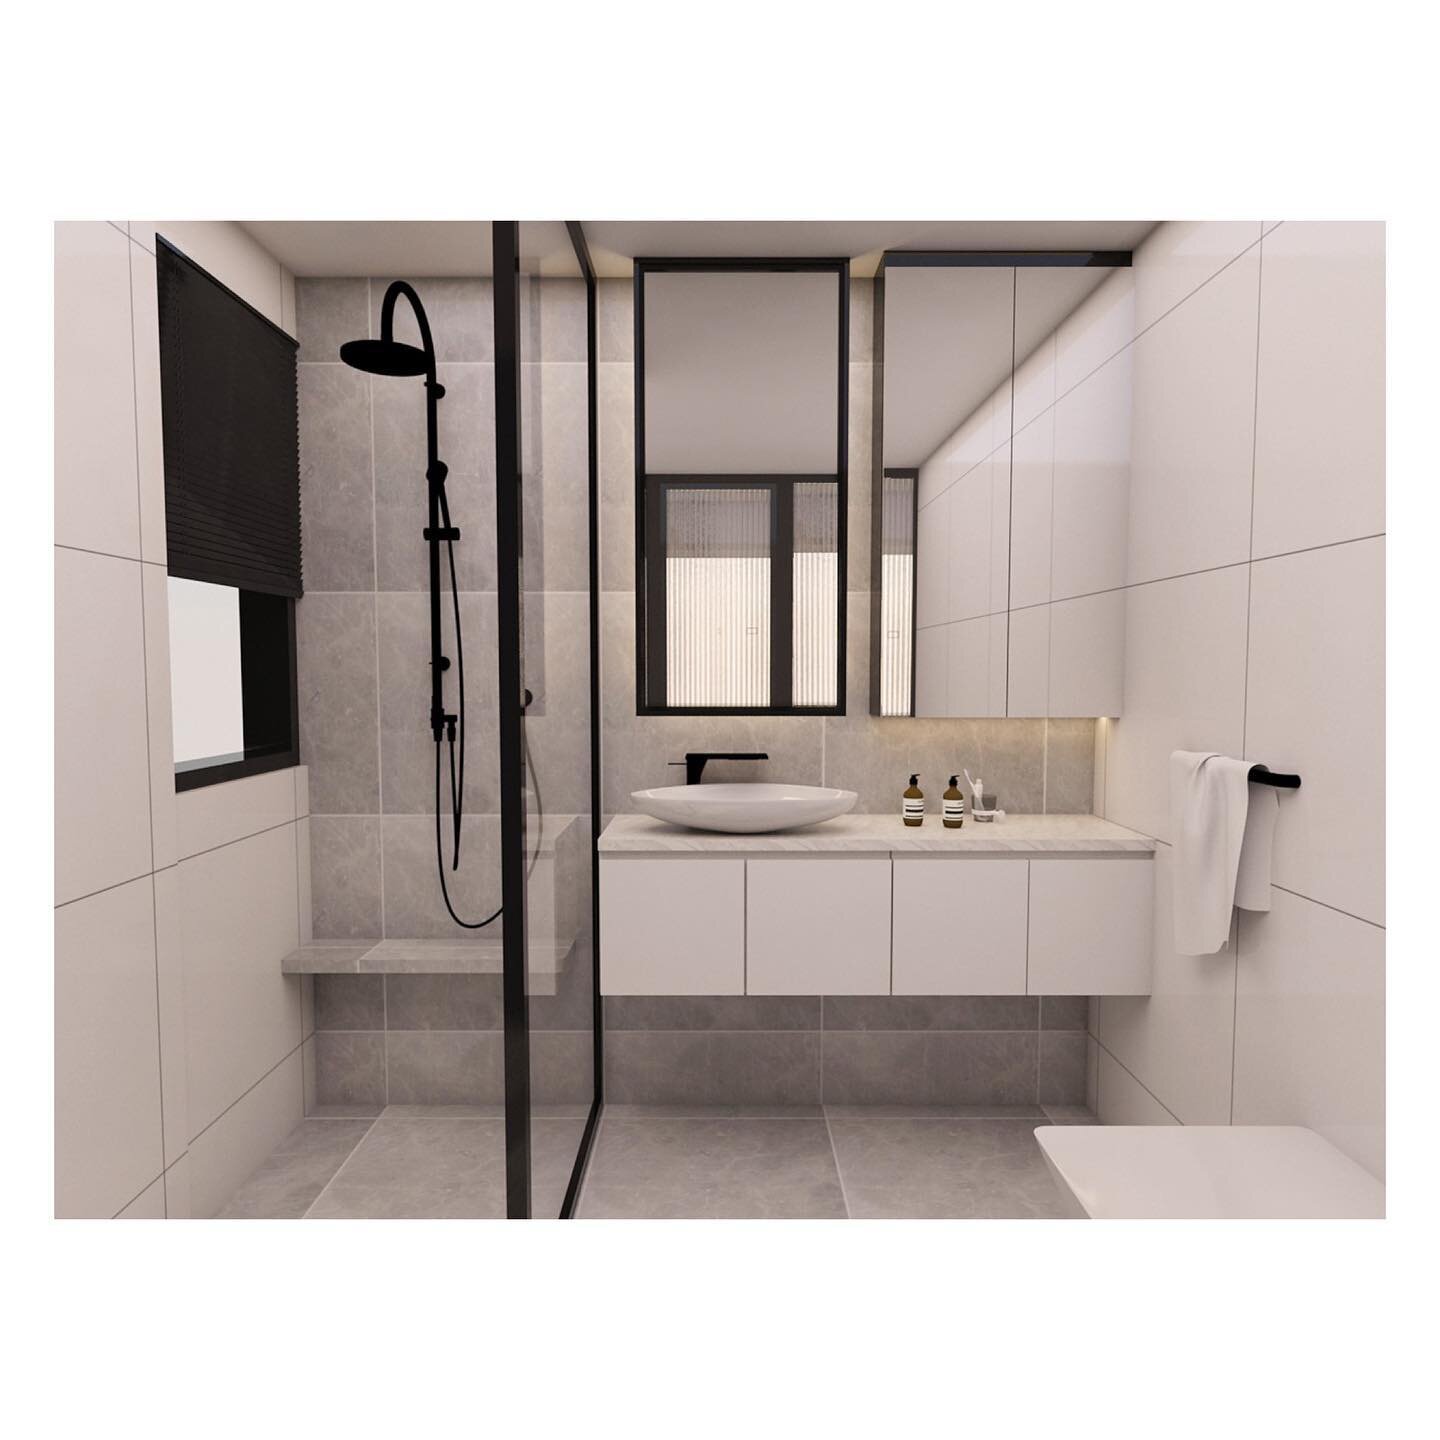 Interior - Pure bright white bathroom facelift! Fresher and just feel so right! Start organising... start to declutter... 💡

室内 - 纯净明亮的白色浴室改头换面！更新鲜和明亮 👀🚿🛁

#interiors #bath #whiteliving #organisedspace #sghomes #sginterior #interiordesigners #hom